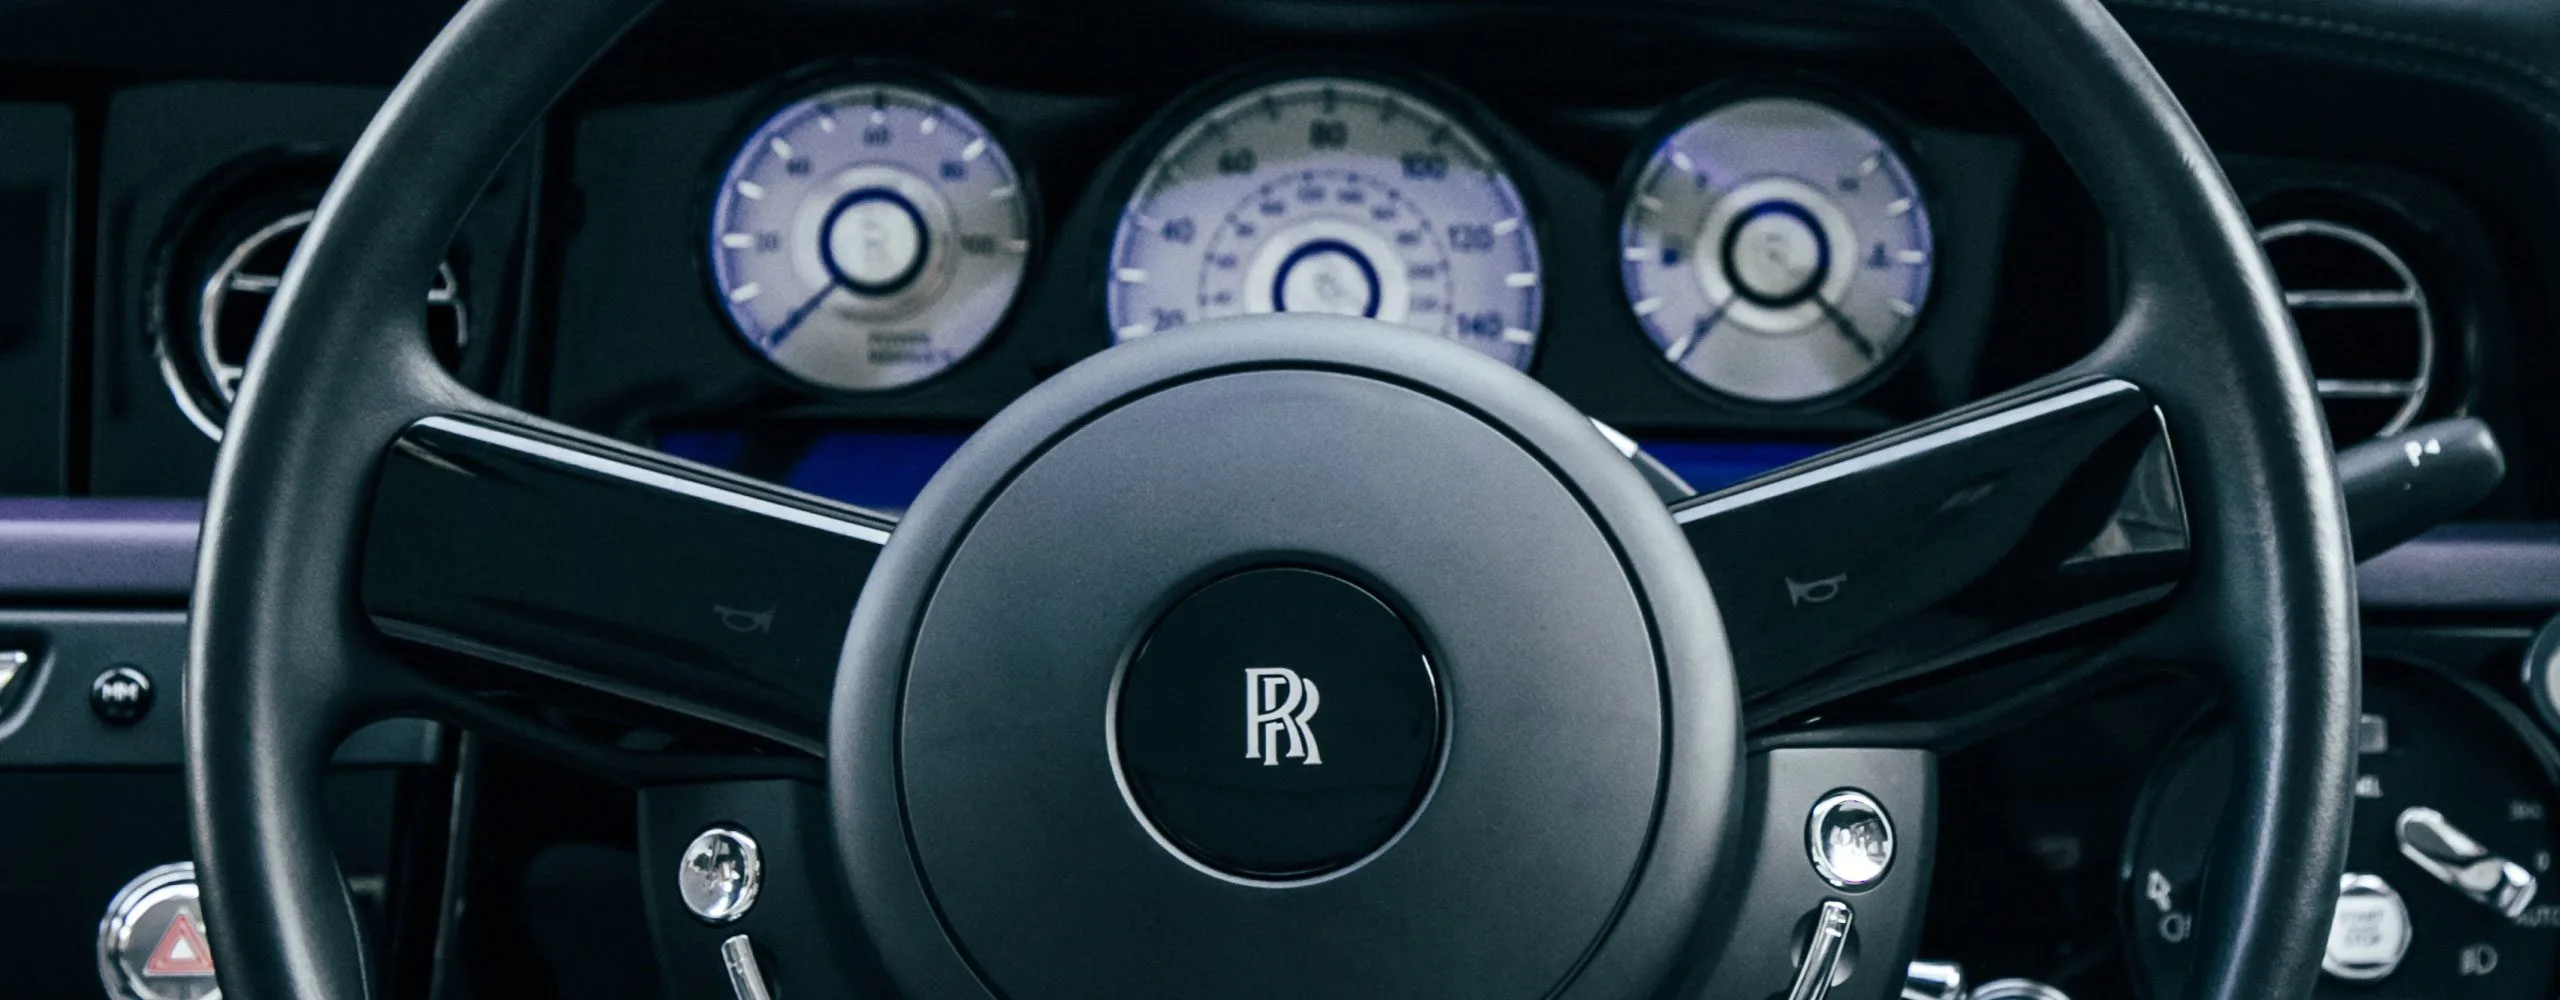 Rolls Royce Chauffeur Car Driving Wheel